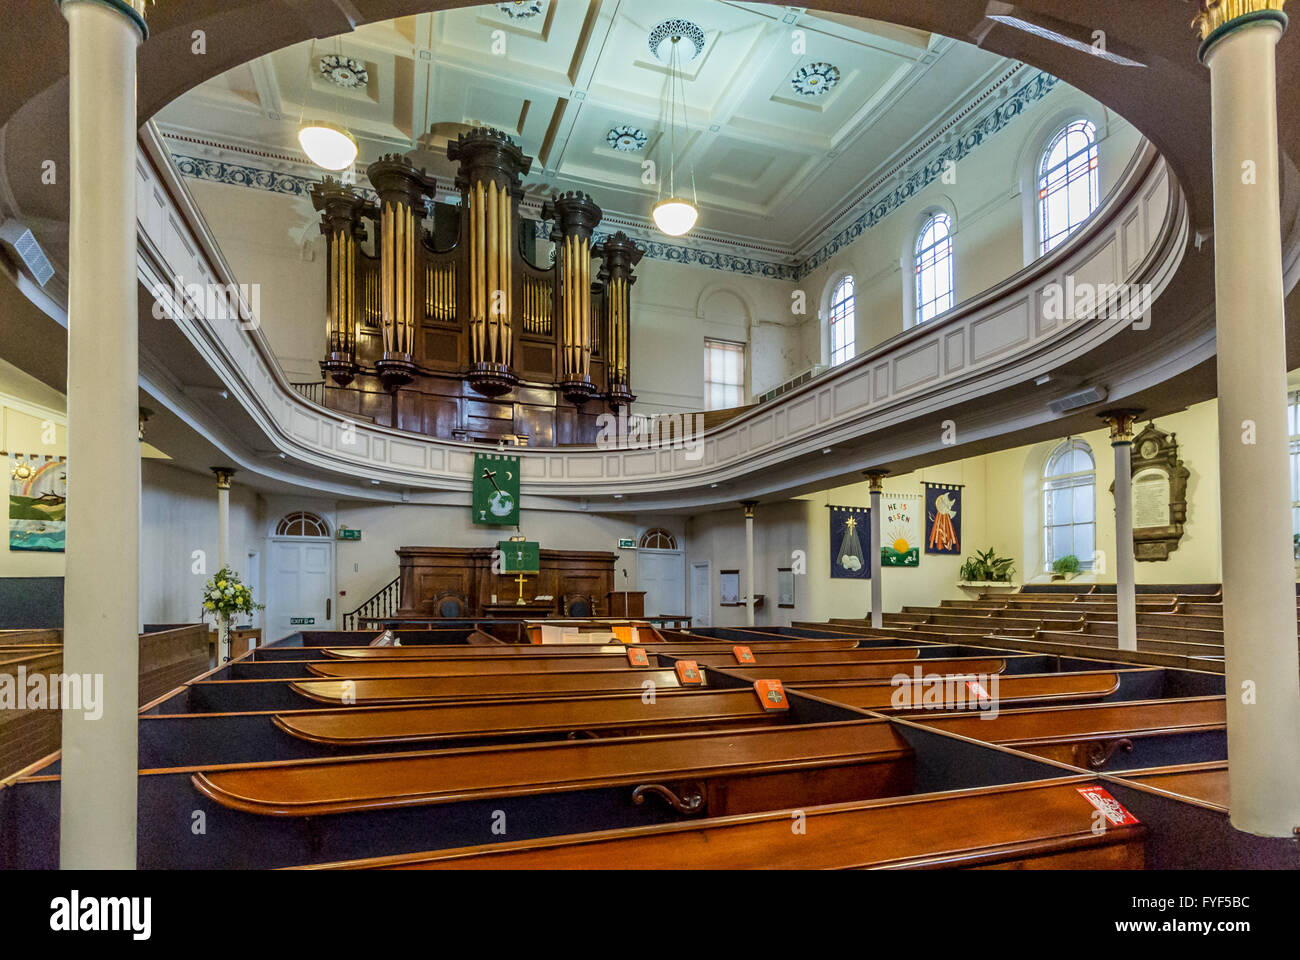 York Central Methodist Church, York, UK. Stock Photo